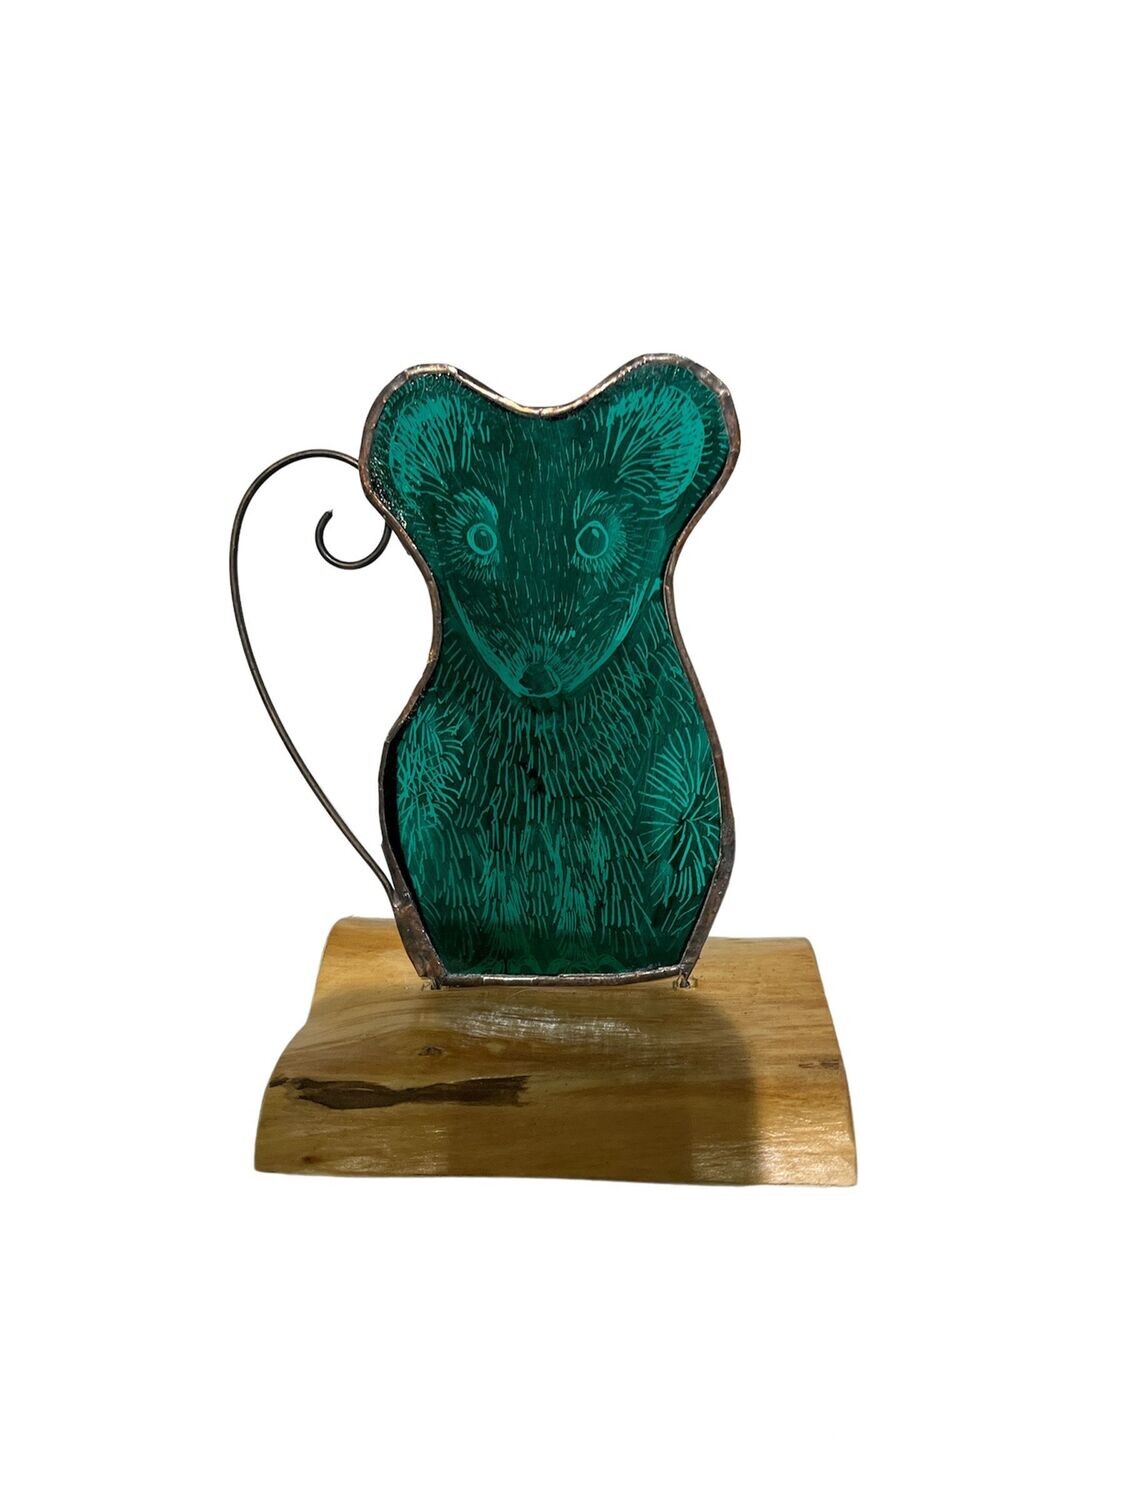 Jade Mouse by Lorna C Radbourne